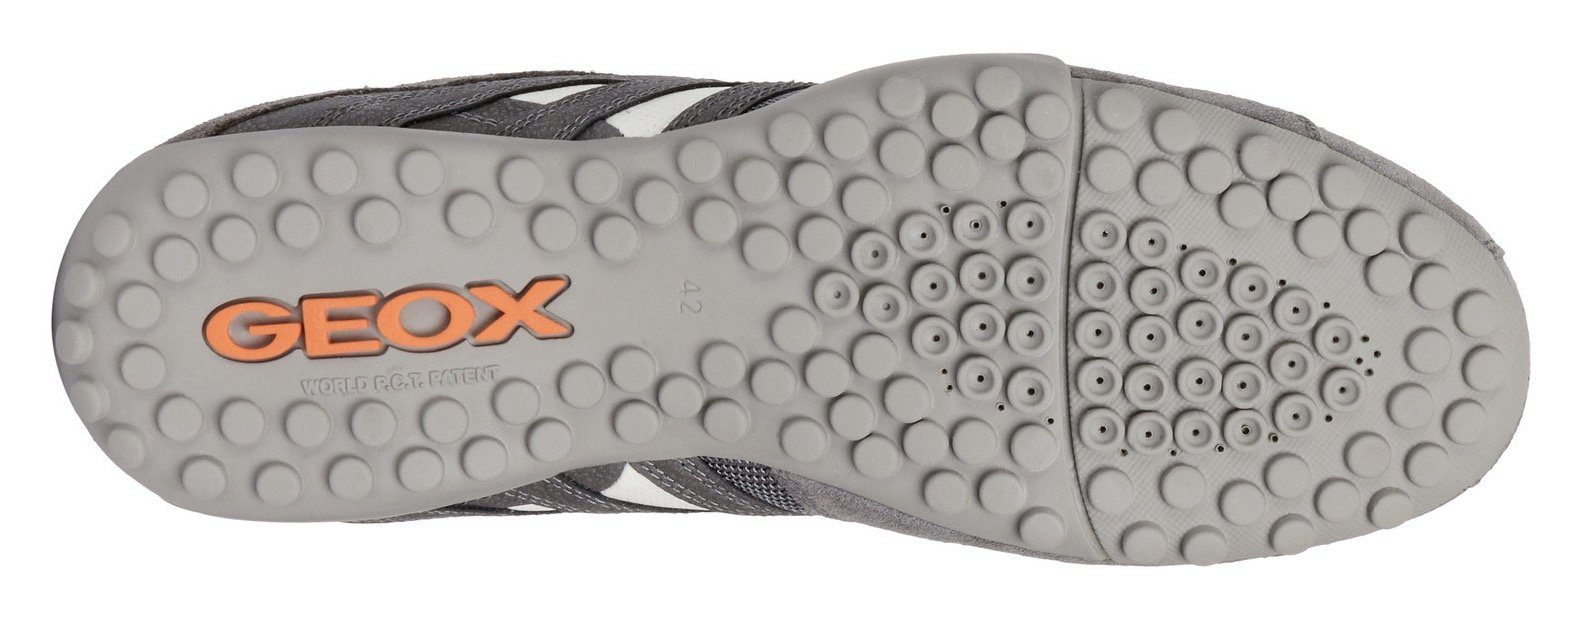 Materialmix mit Spezial Snake weiß, Geox im Membrane Geox Sneaker hellgrau, orange